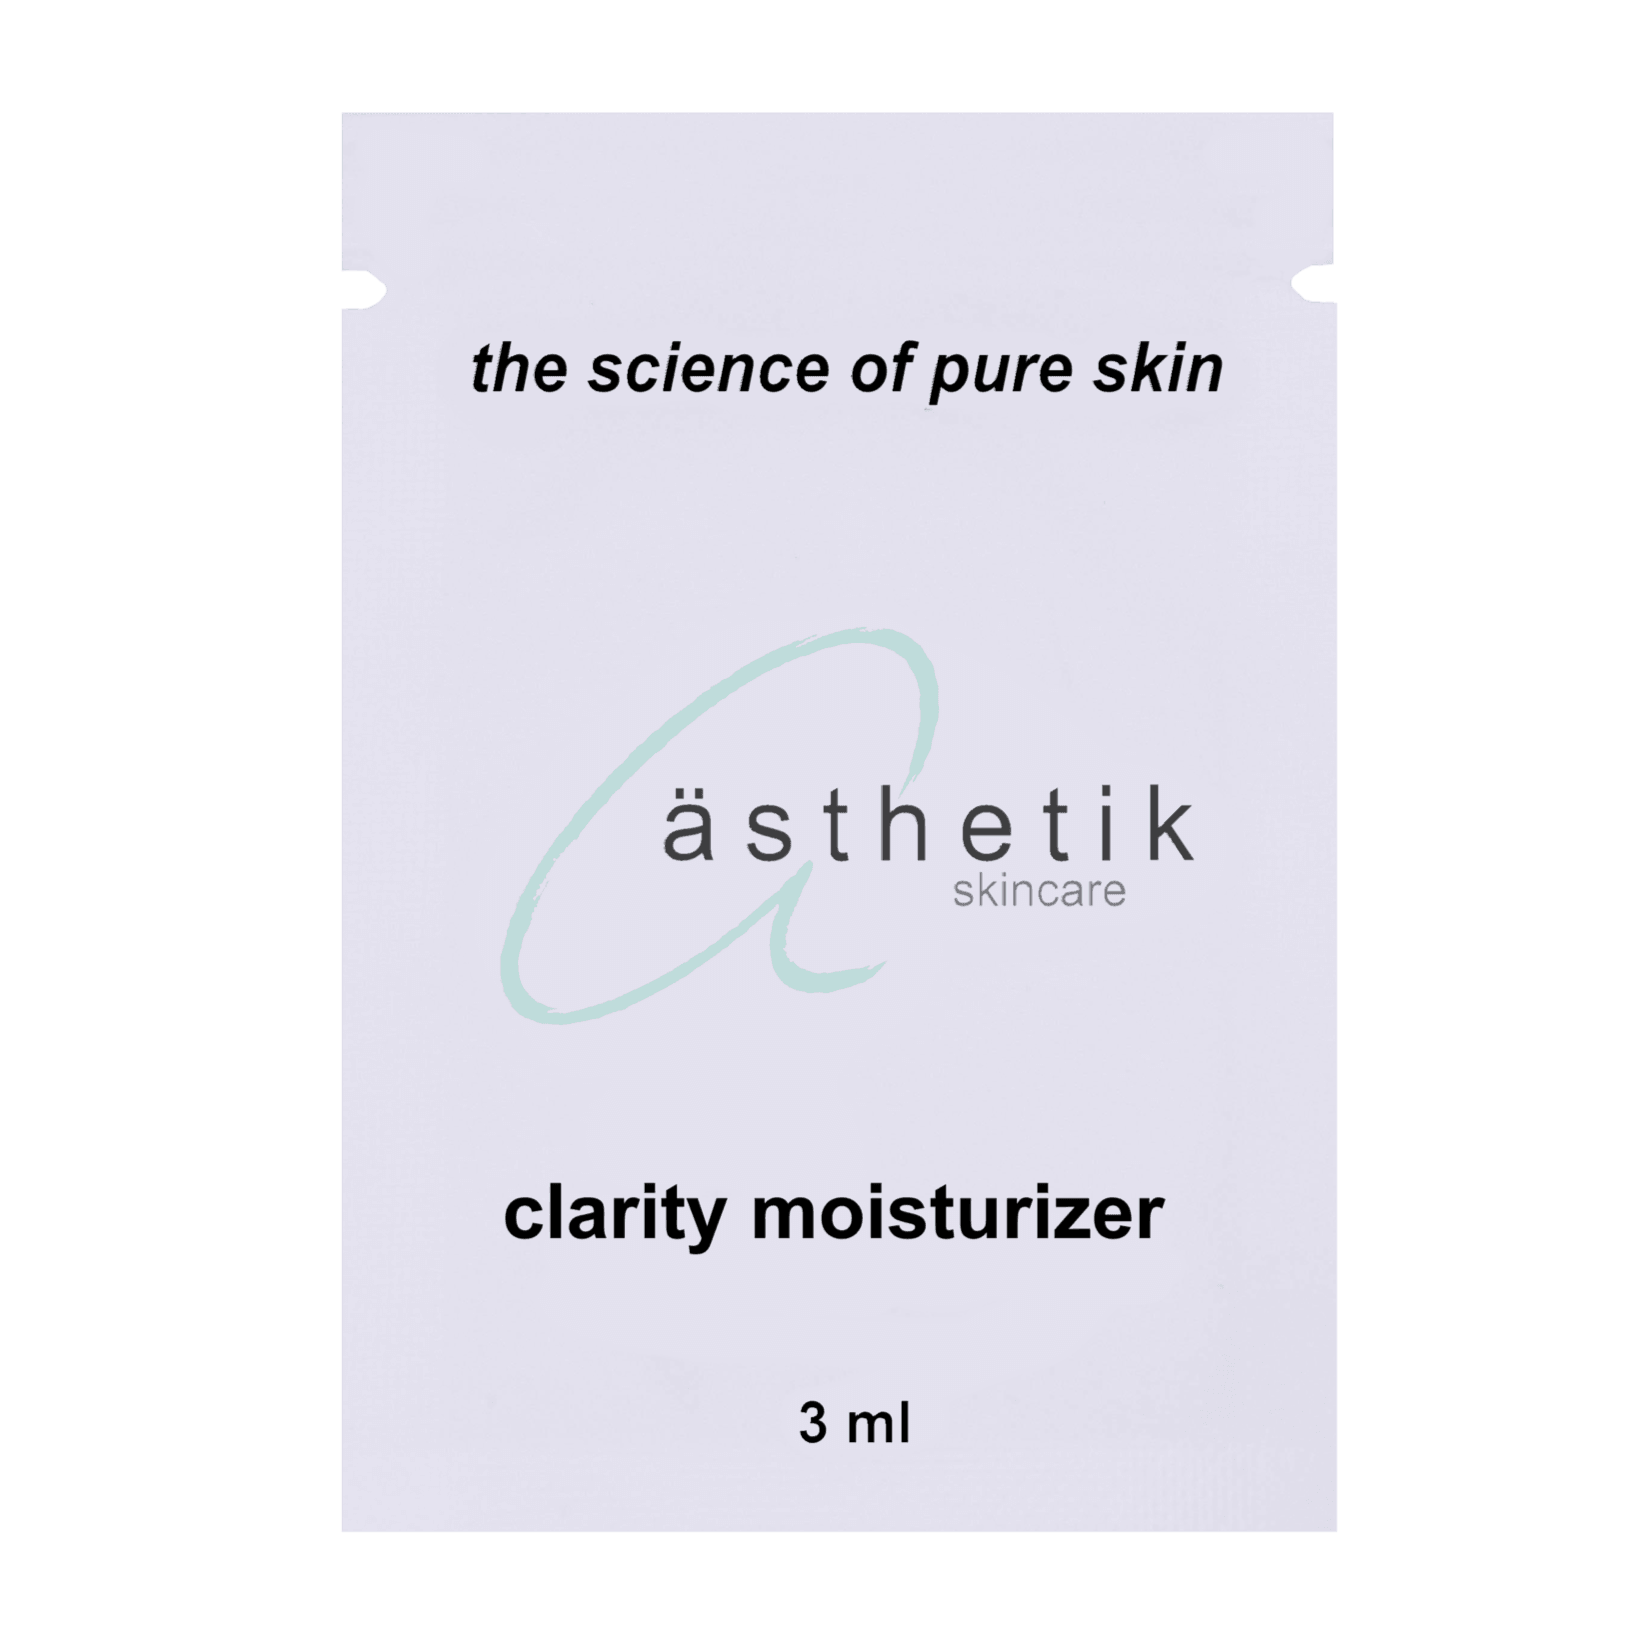 clarity moisturizer sample - ästhetik skincare - sample